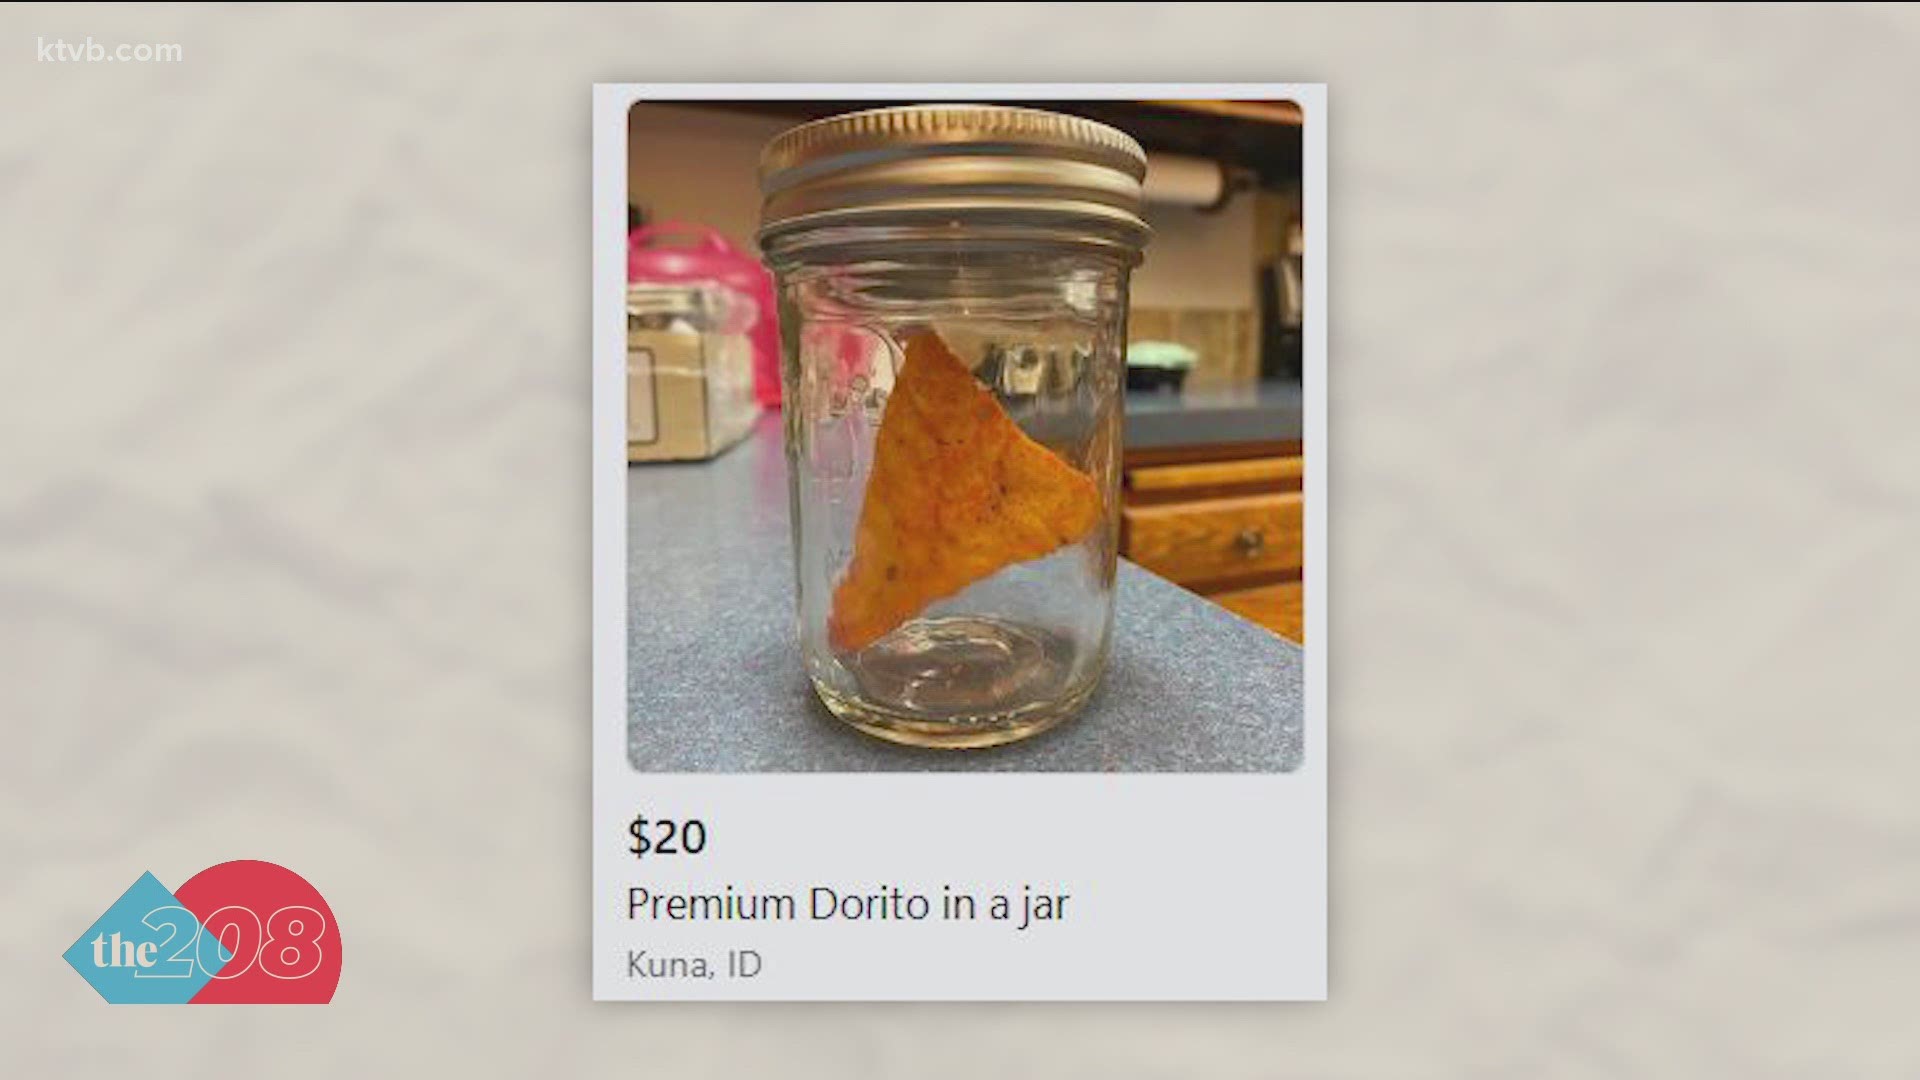 Noah Stewart is cashing in on his crispy chip in a jar. He sells them for 20 bucks a piece.